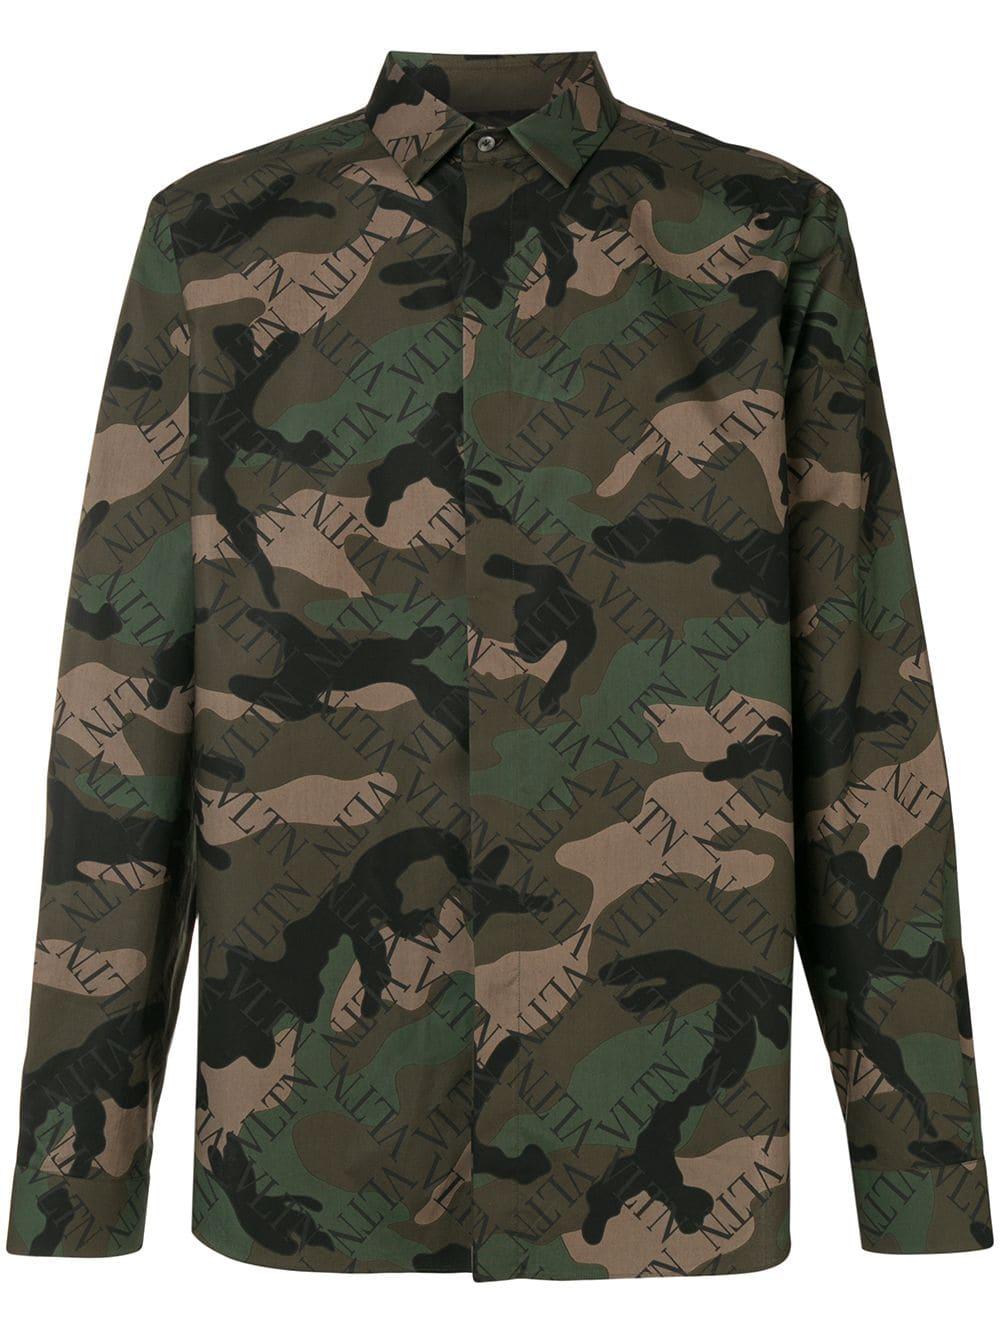 Valentino Cotton Vltn Grid Camouflage Shirt in Green for Men - Lyst